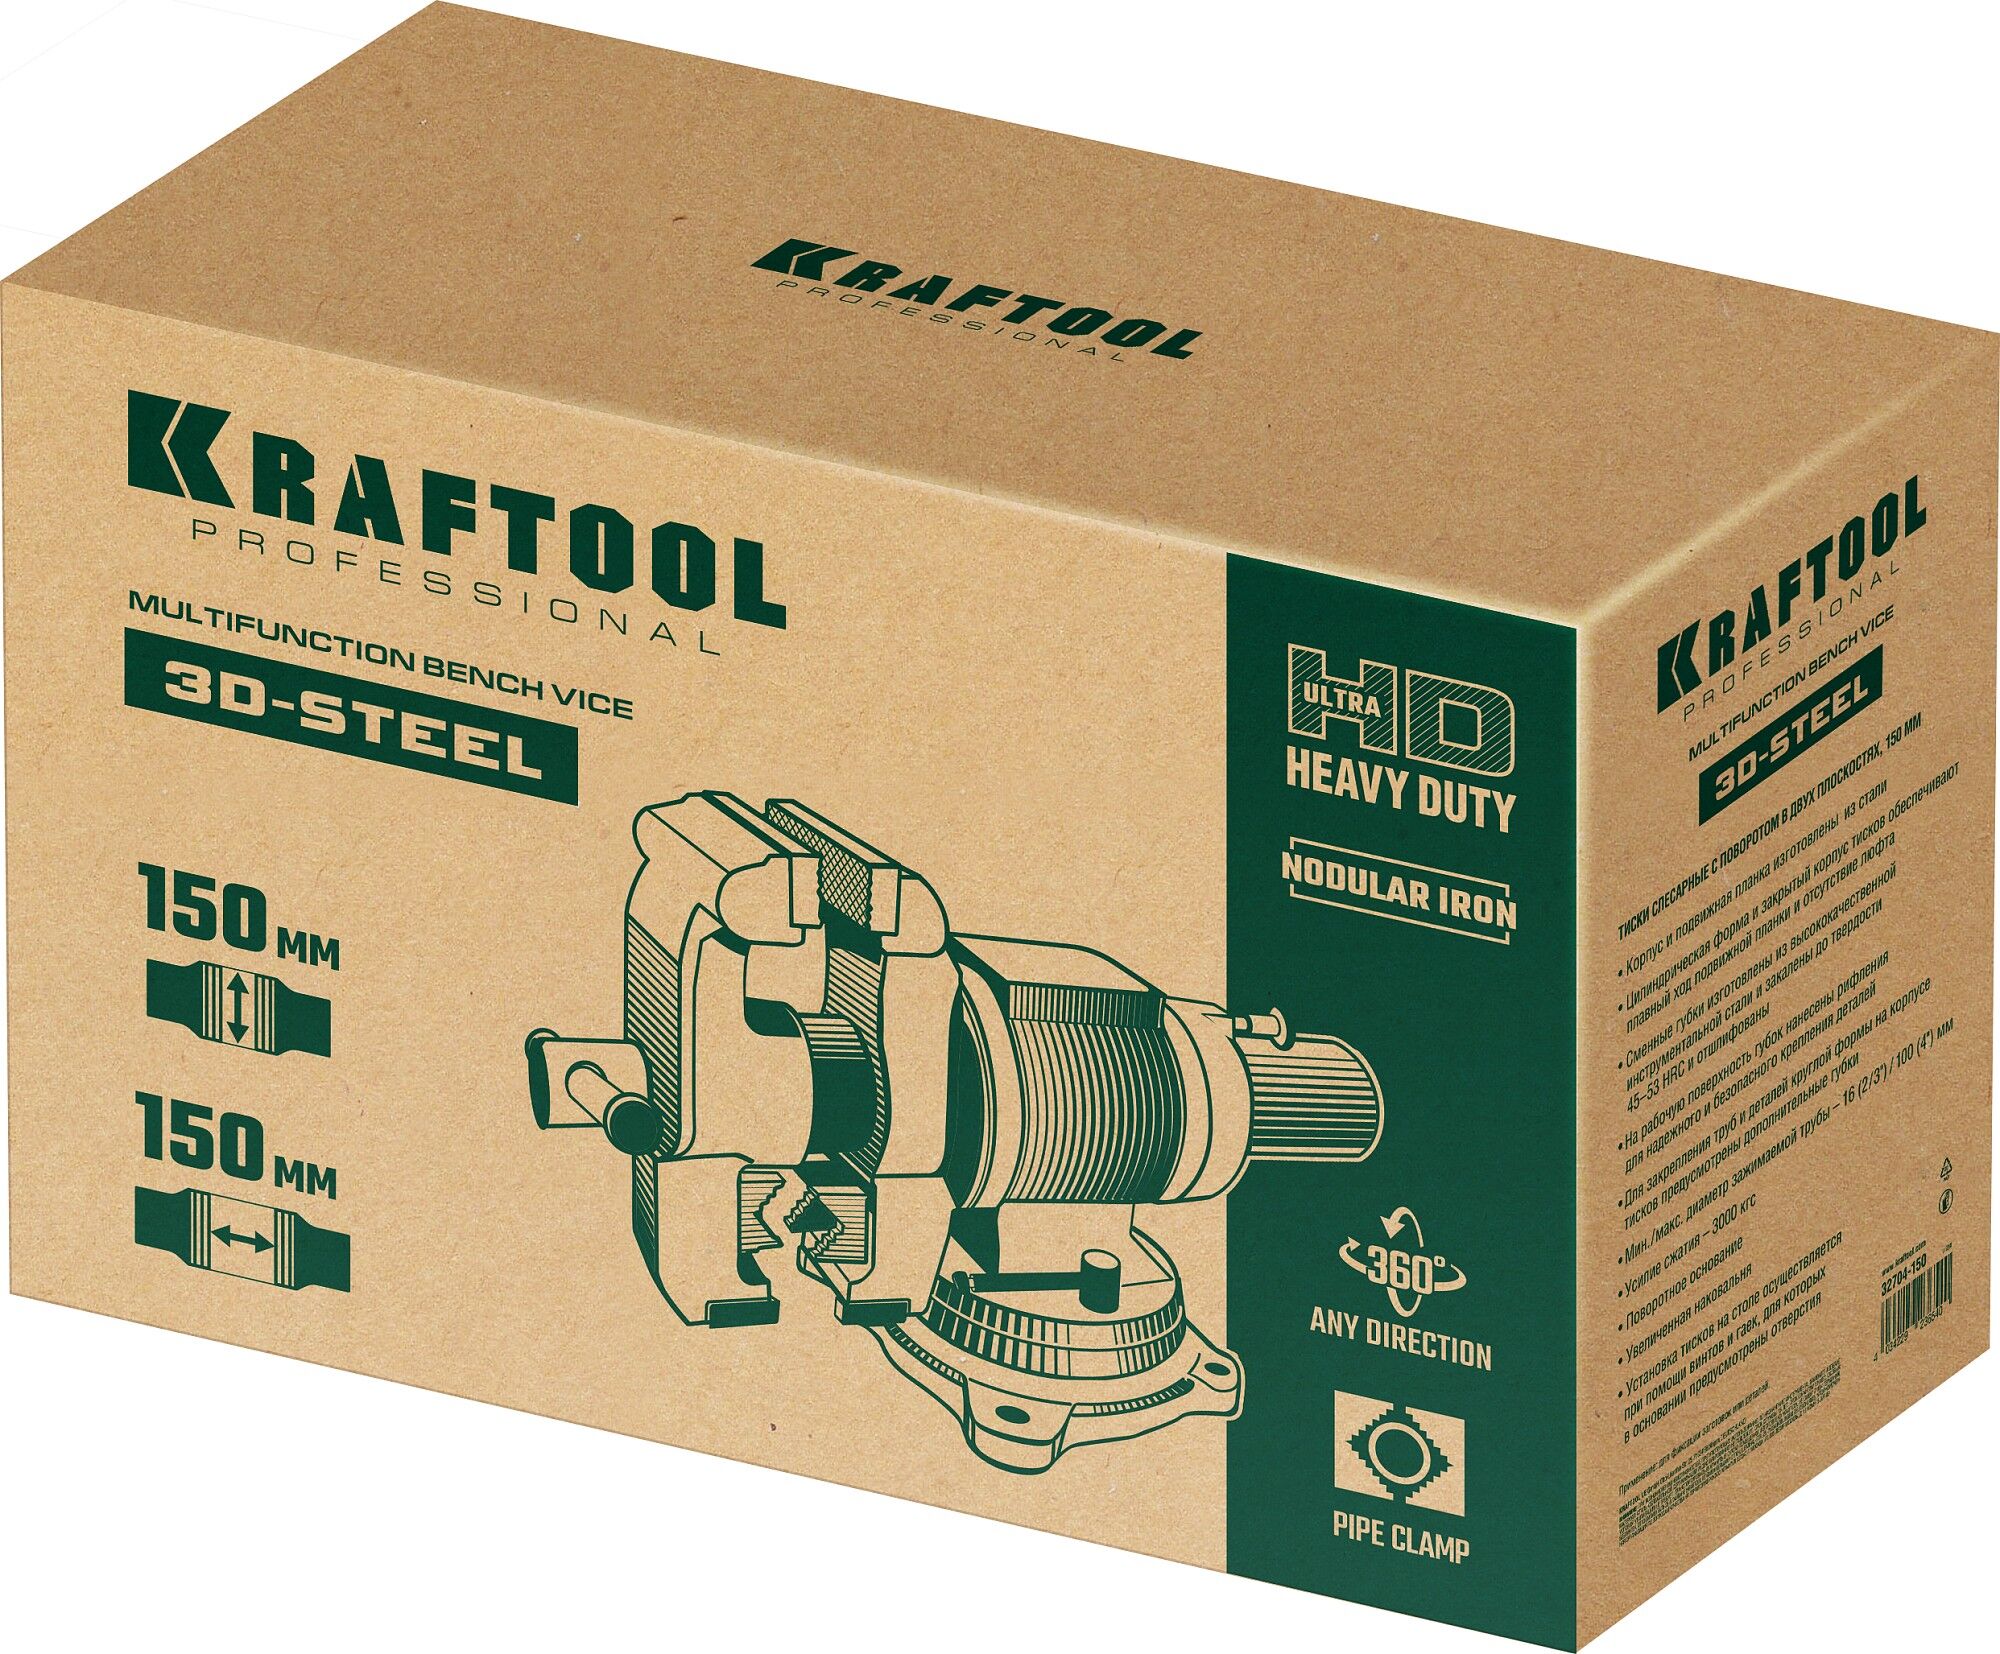 KRAFTOOL 3D-STEEL 150 мм, Слесарные тиски (32704-150)